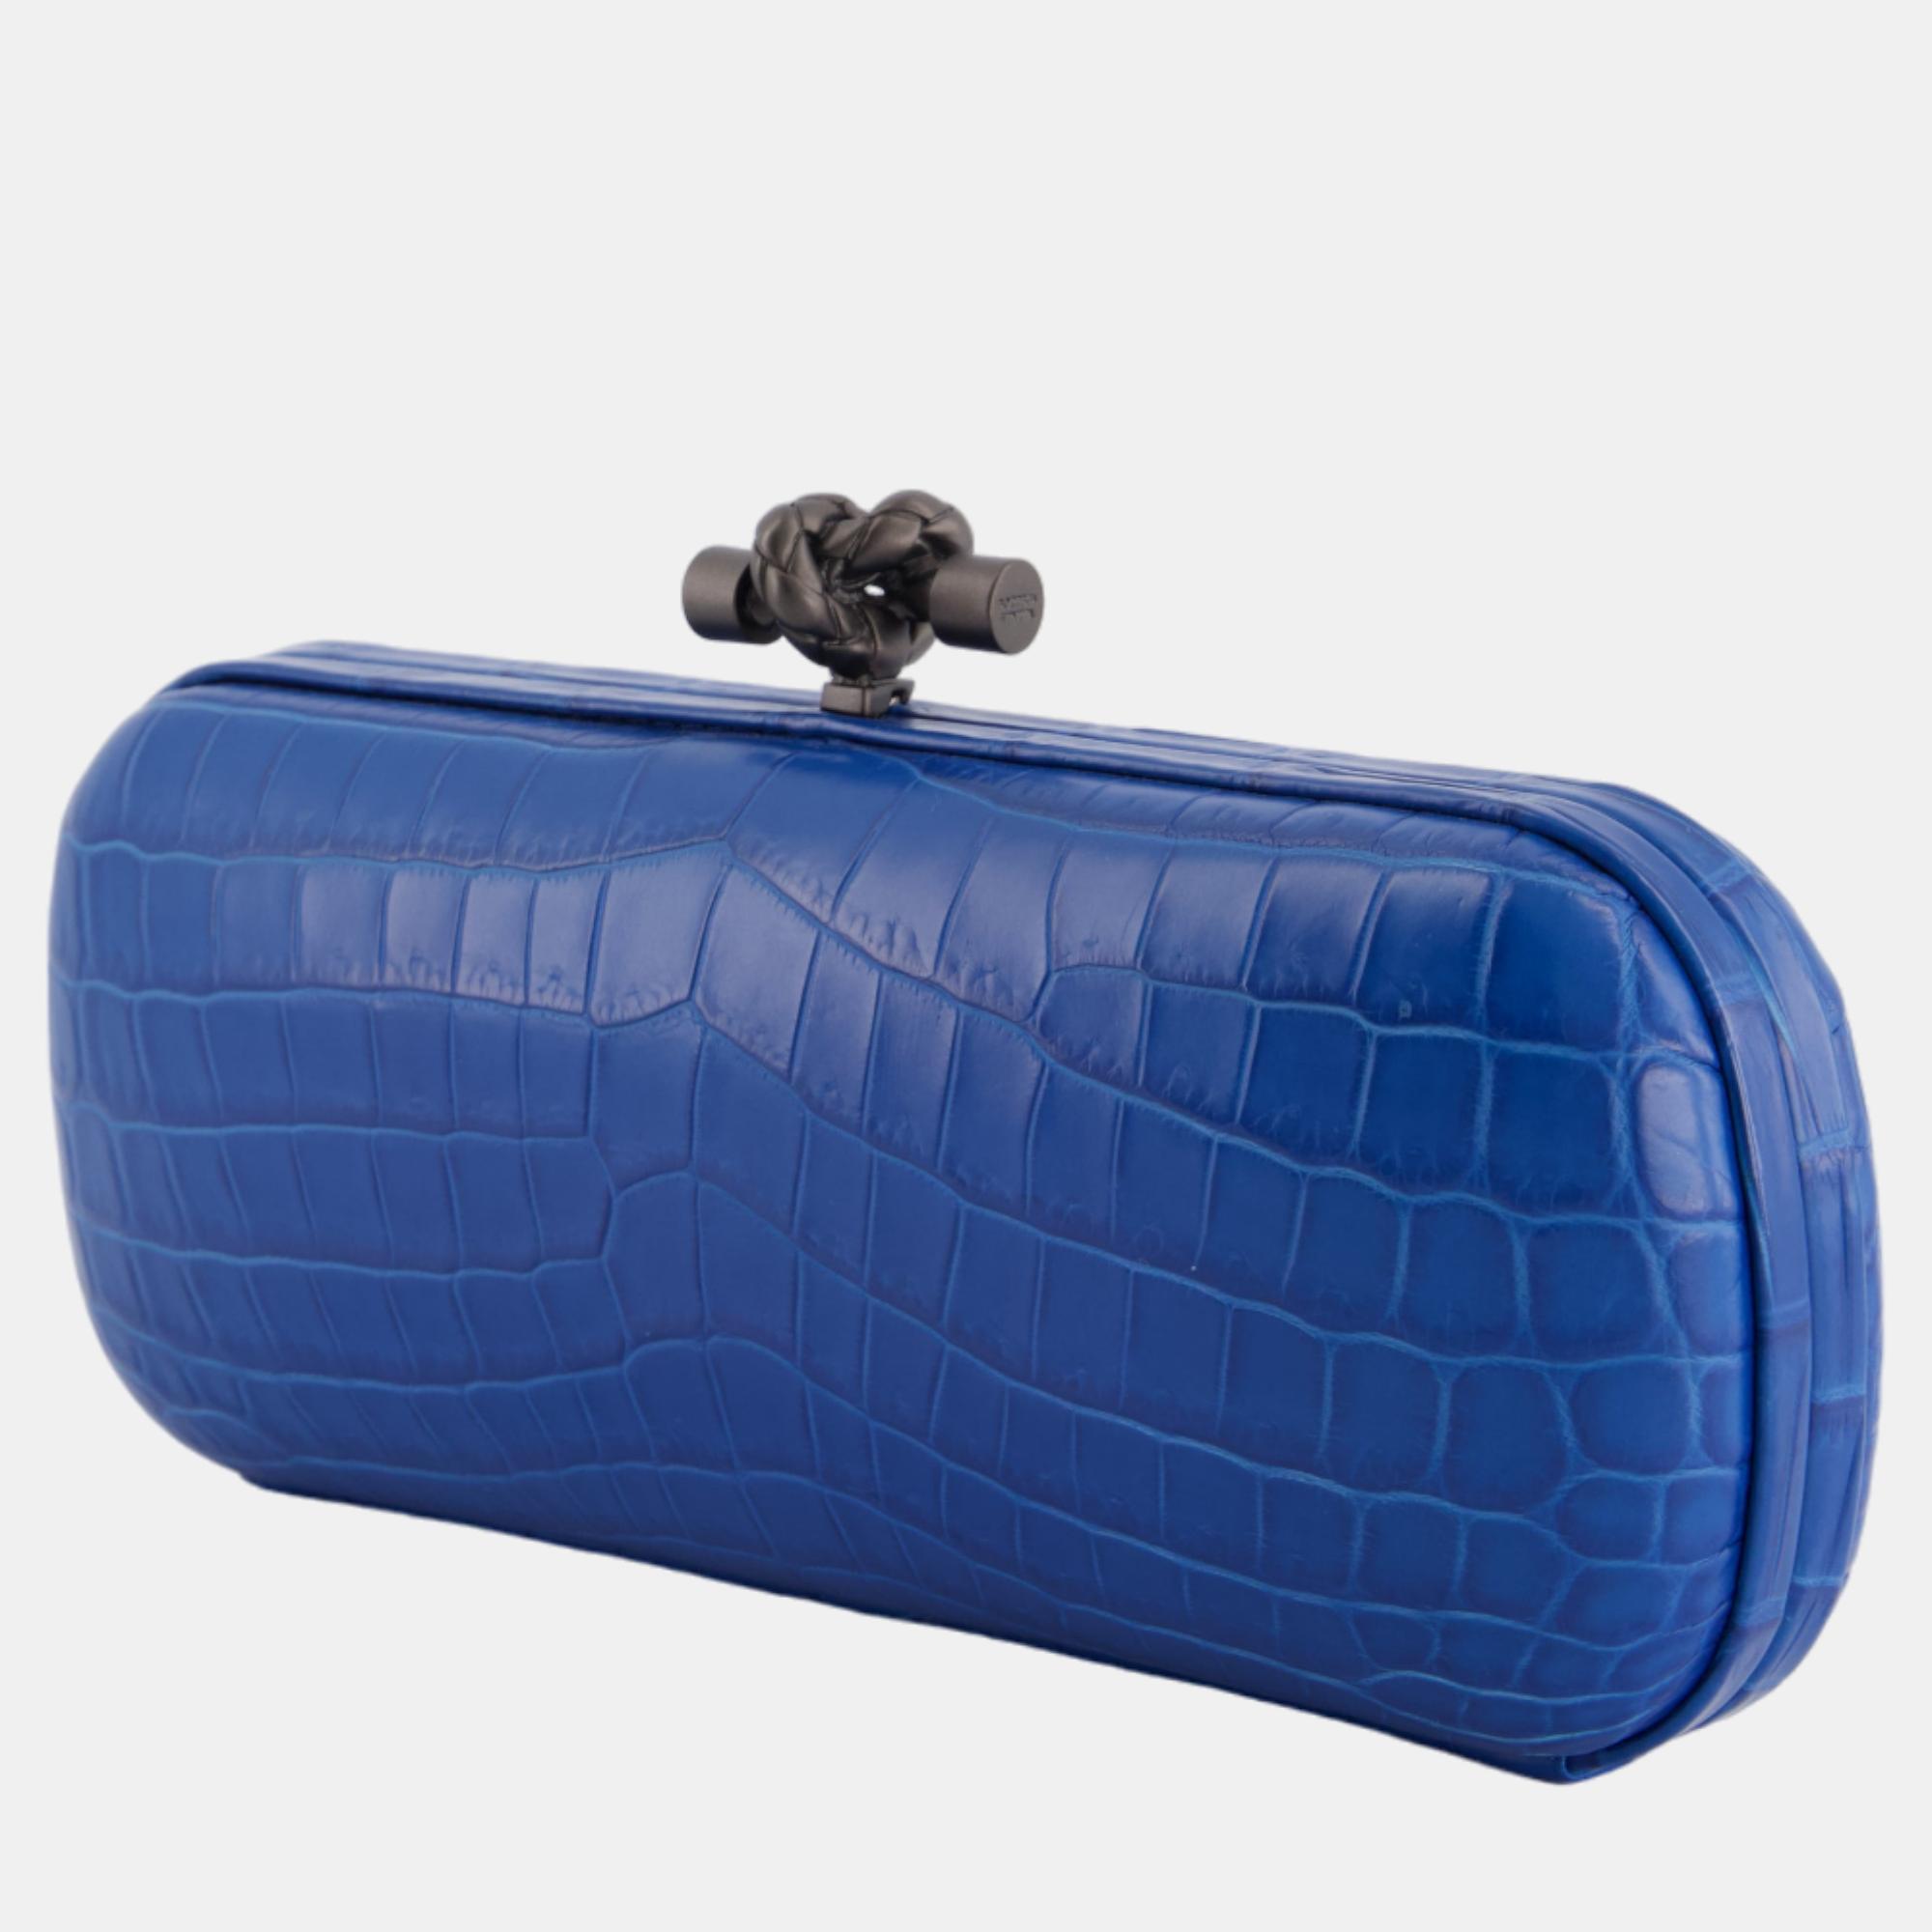 Bottega Veneta Blue Crocodile Knot Clutch Bag